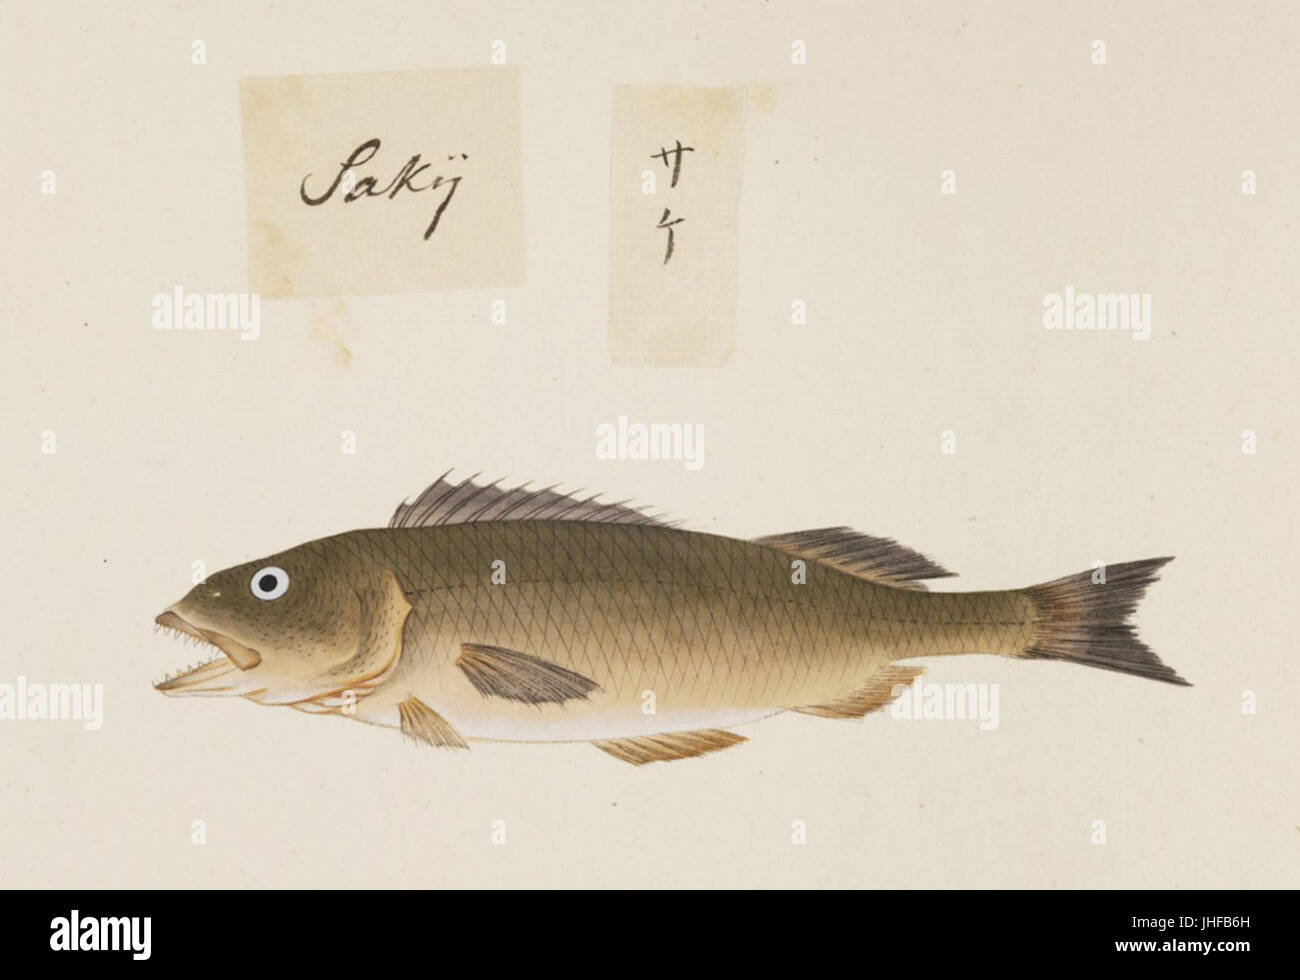 Naturalis Biodiversity Center - RMNH.ART.494 - Unidentified fish - Kawahara Keiga - 1823 - 1829 - Siebold Collection - pencil drawing - water colour Stock Photo